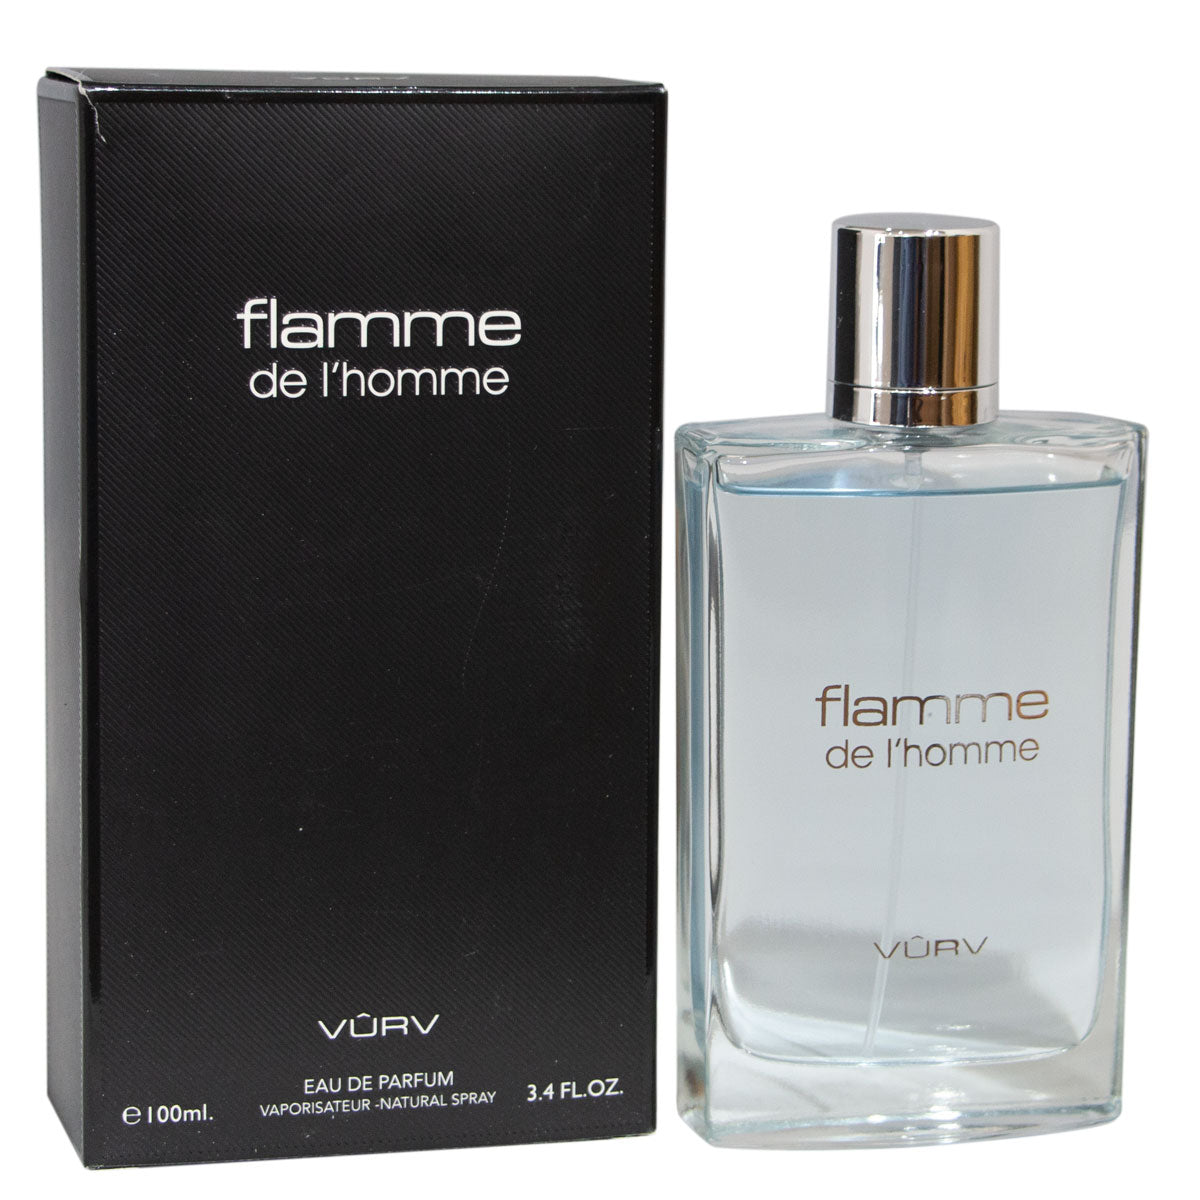 Vurv Flamme De L'Homme Perfume For Men - Eau de Parfum,100ml - samawa perfumes 